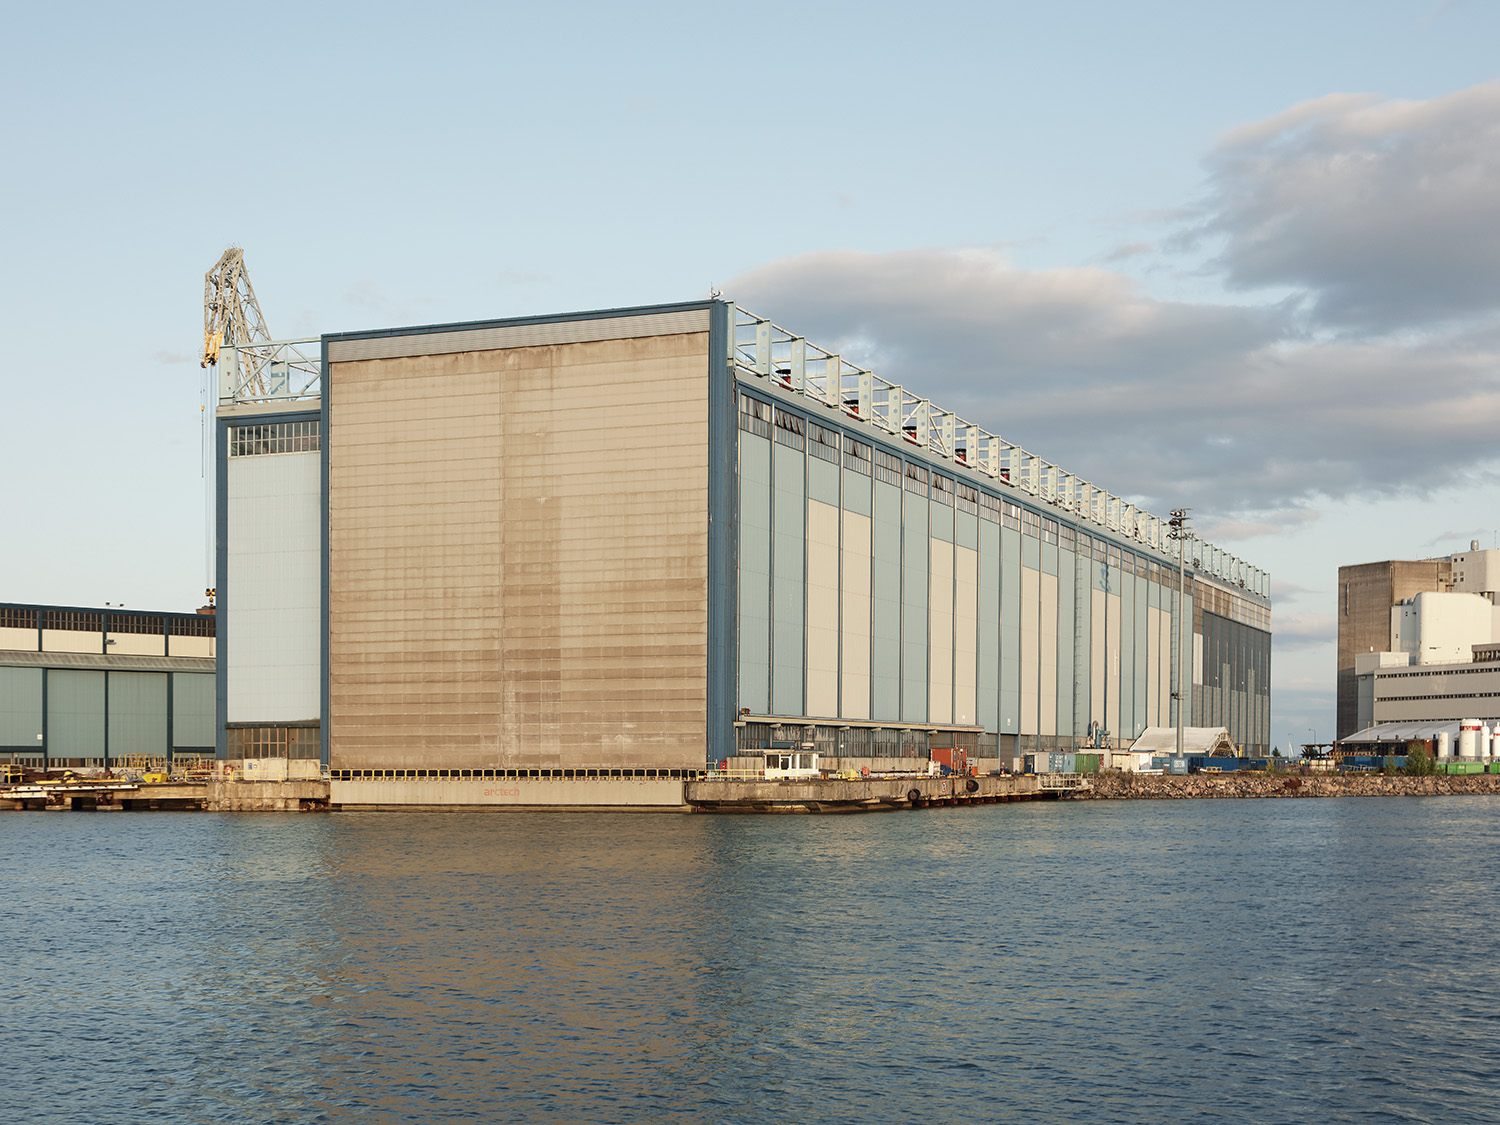 Industrial building
_
Helsinki's Port Area